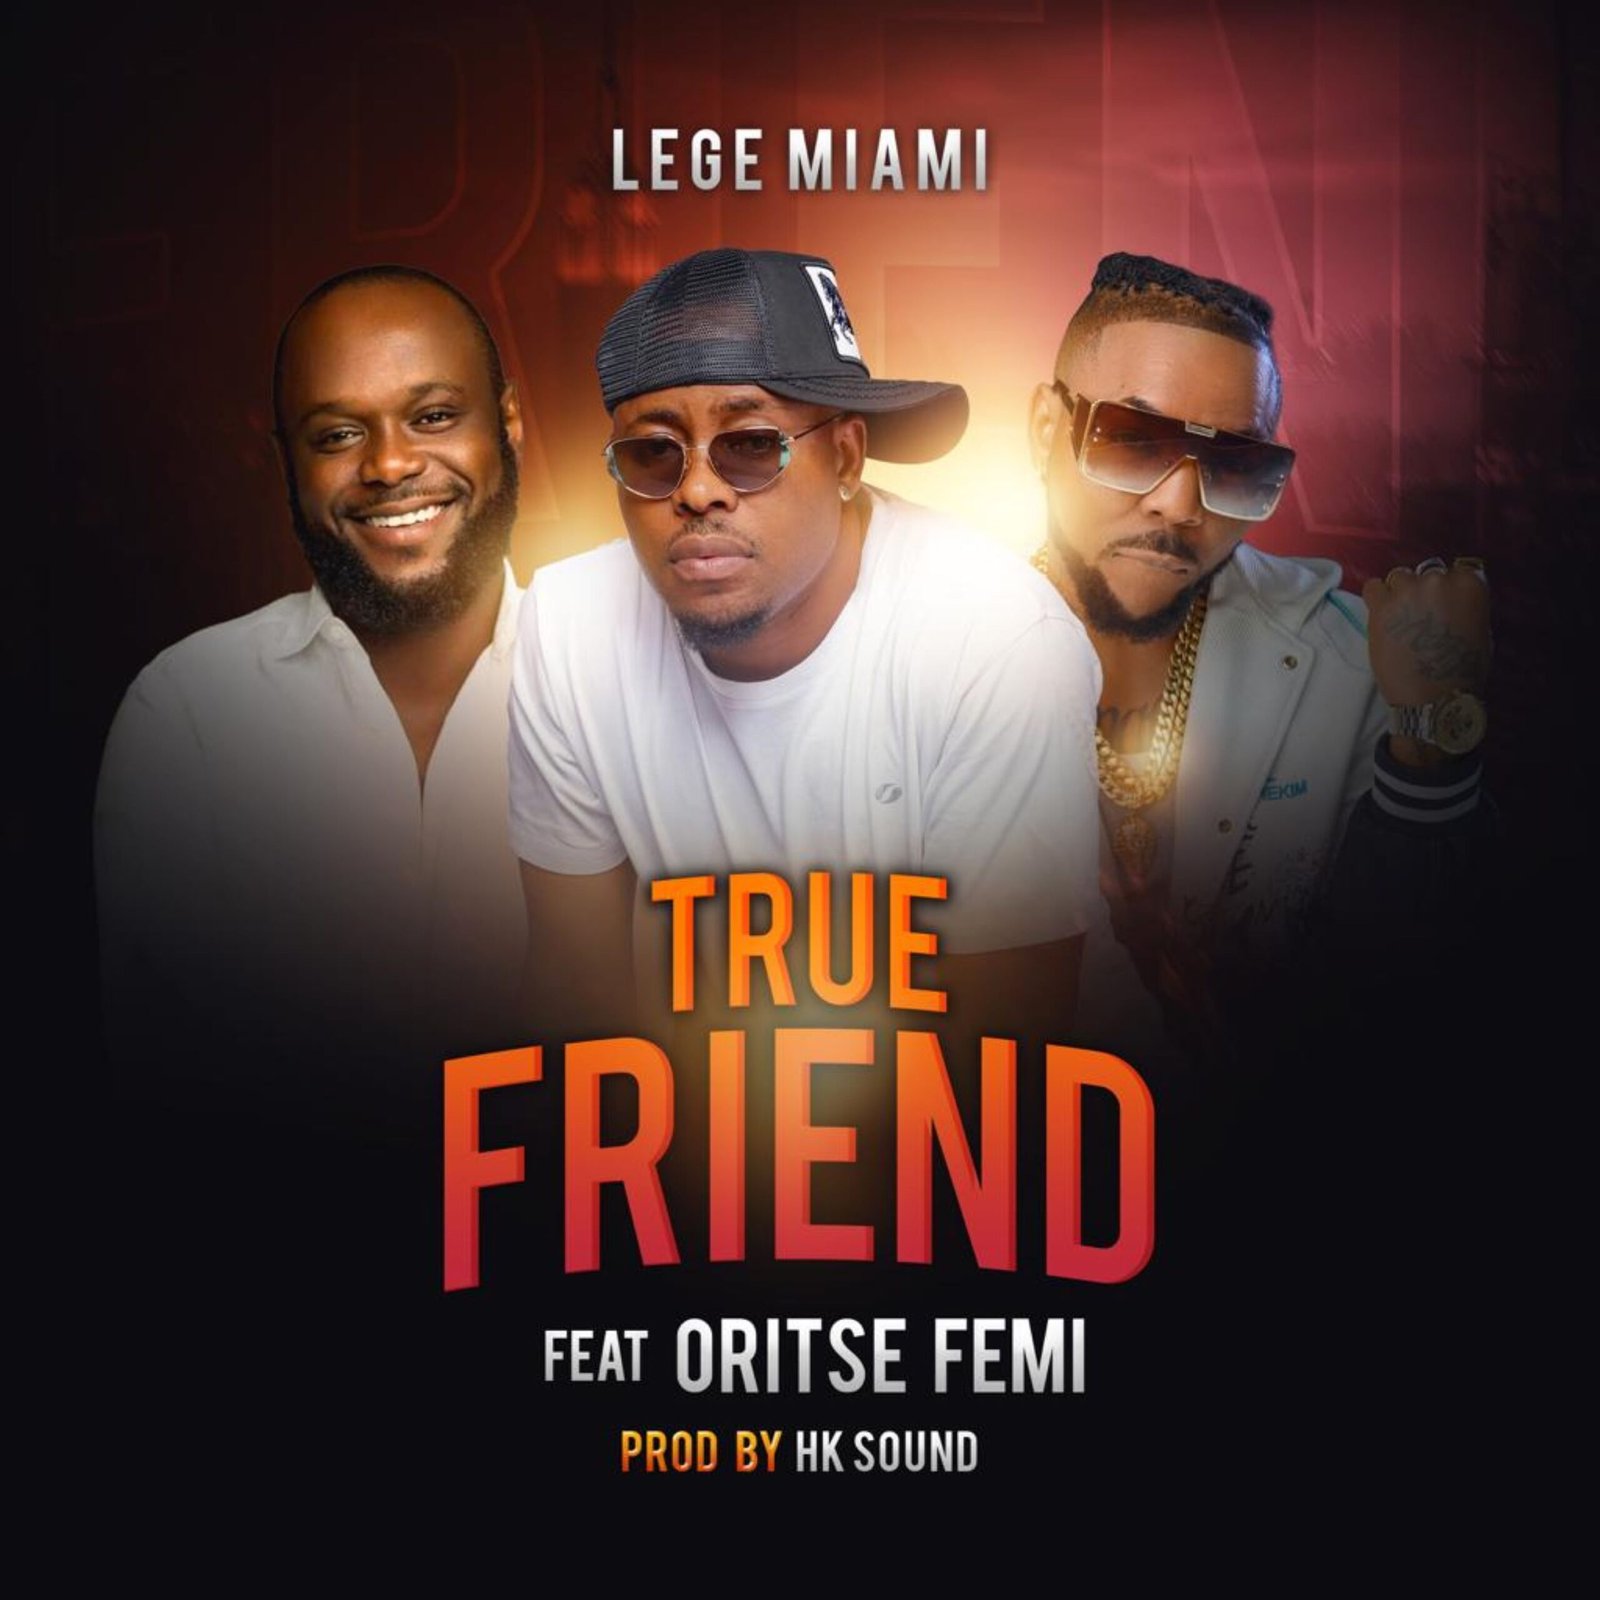 Lege Miami Ft Oriste Femi - True Friend (Remix)